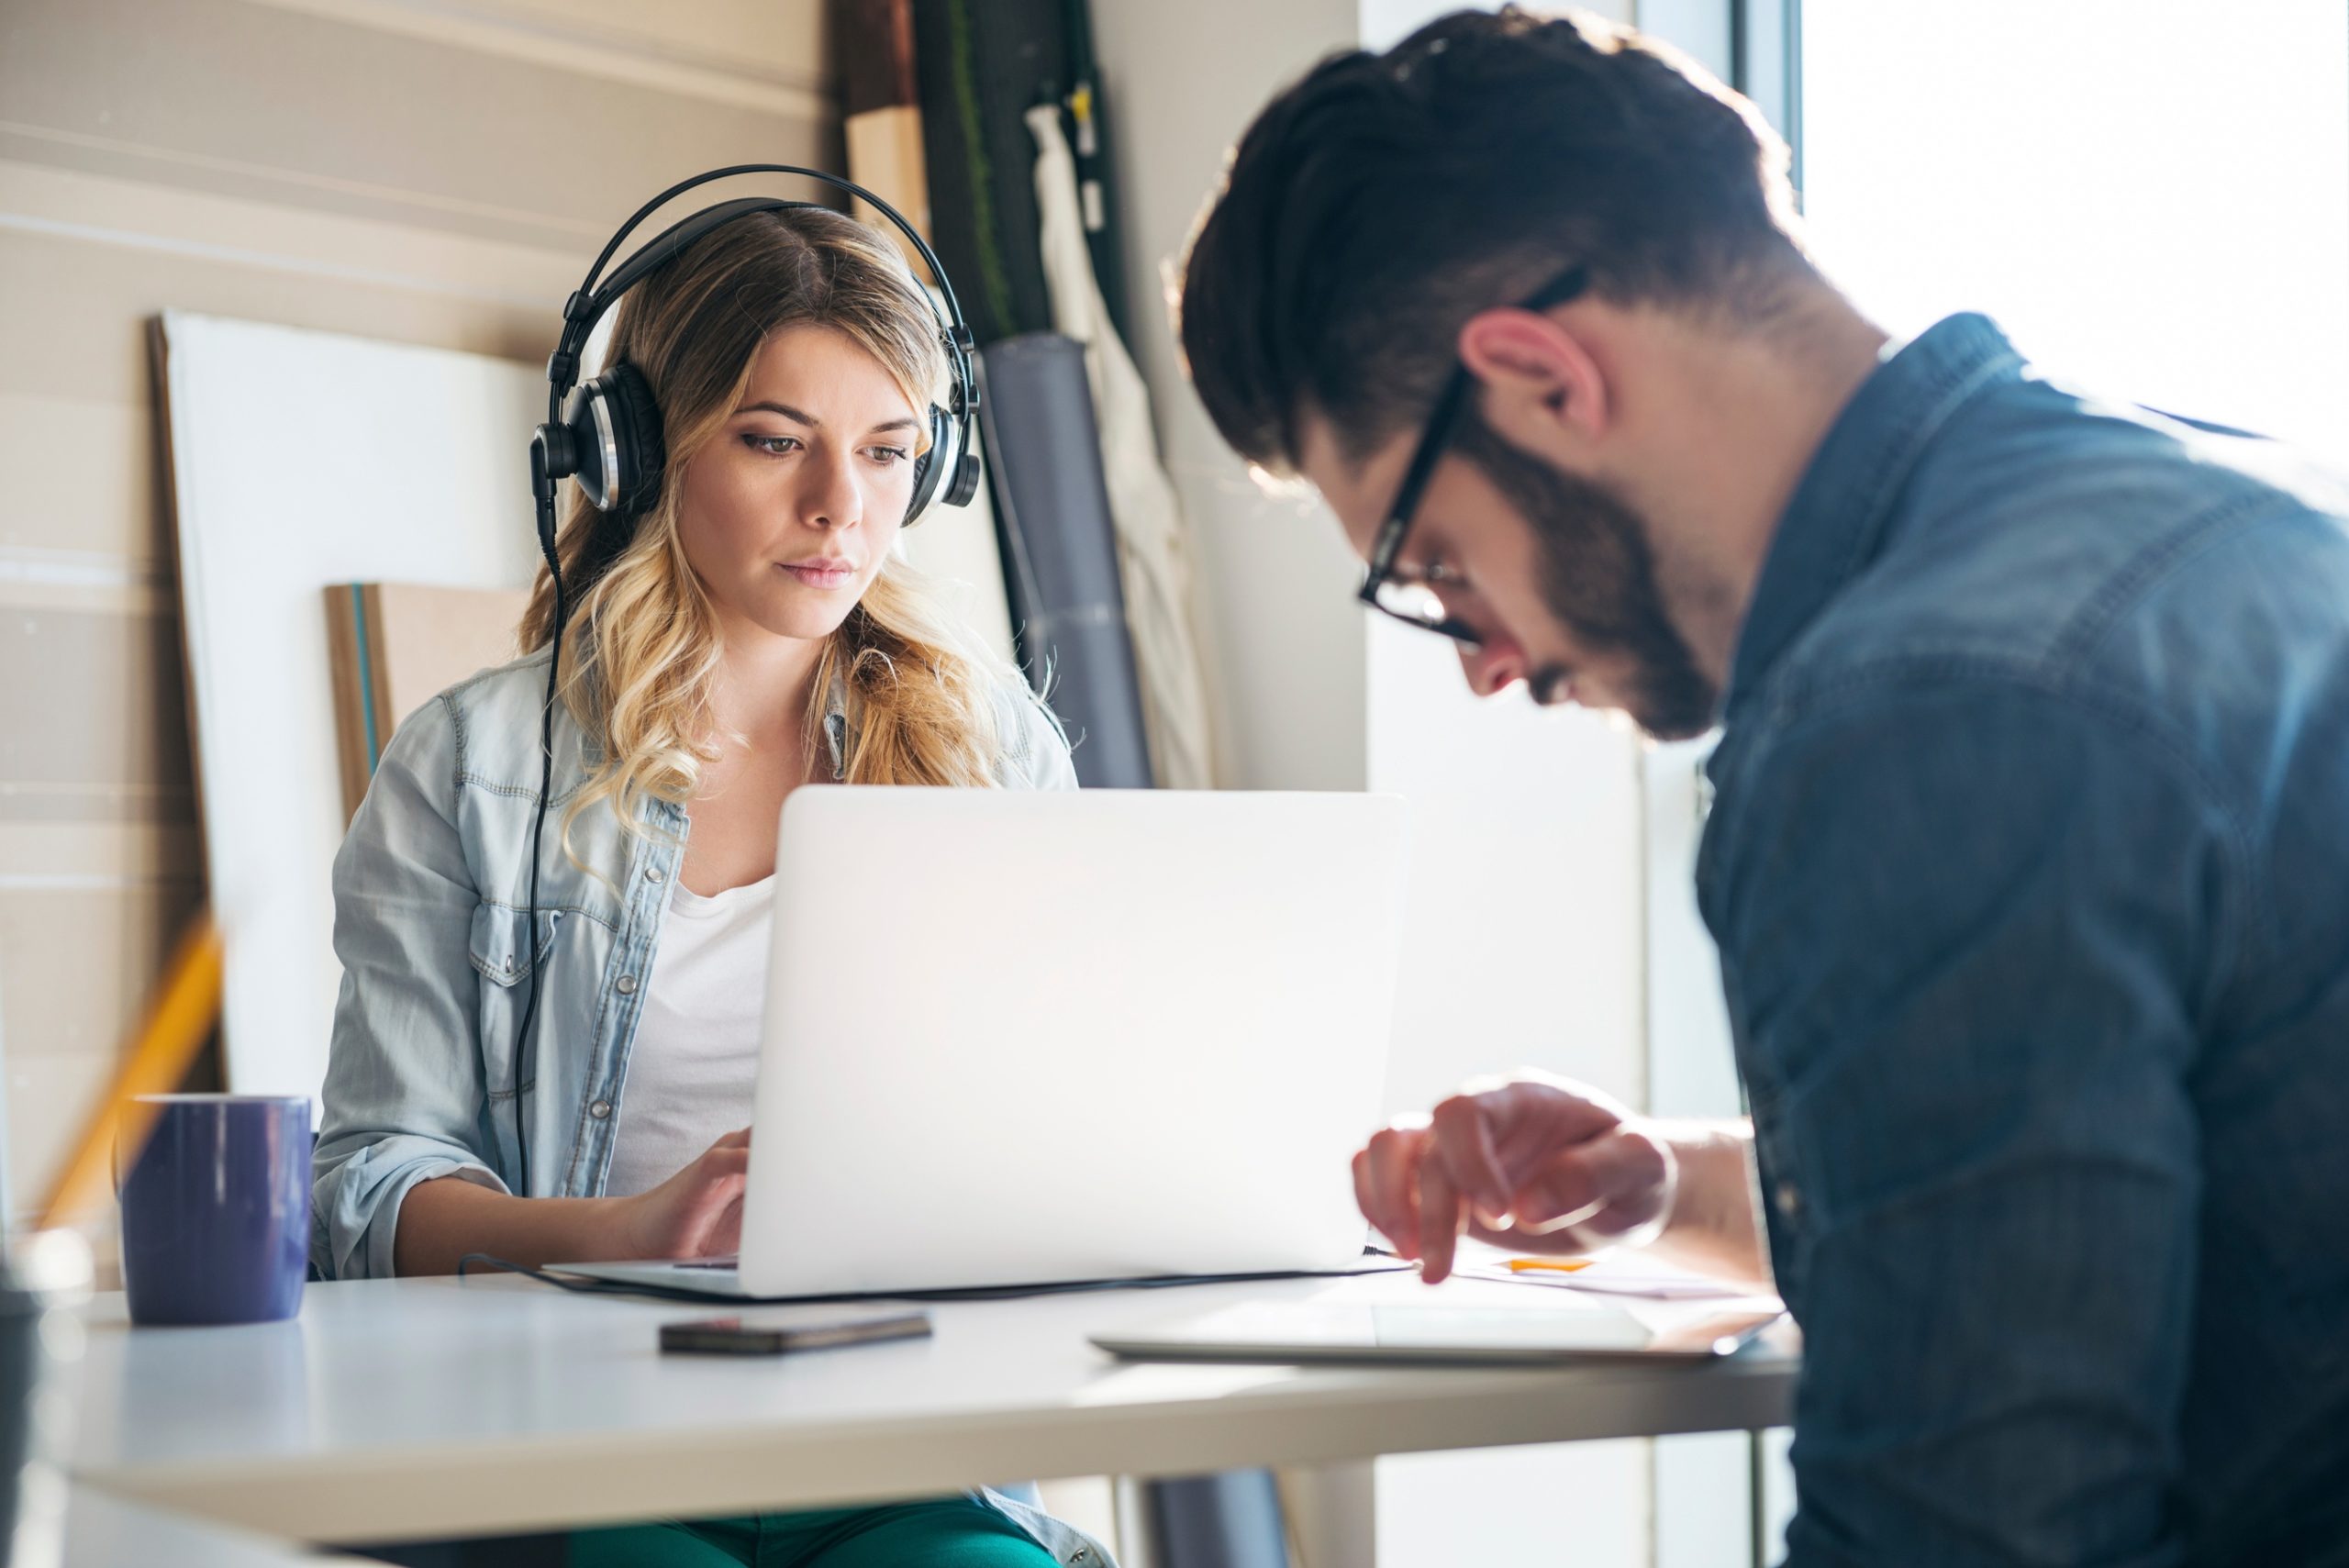 Music can improve employee satisfaction